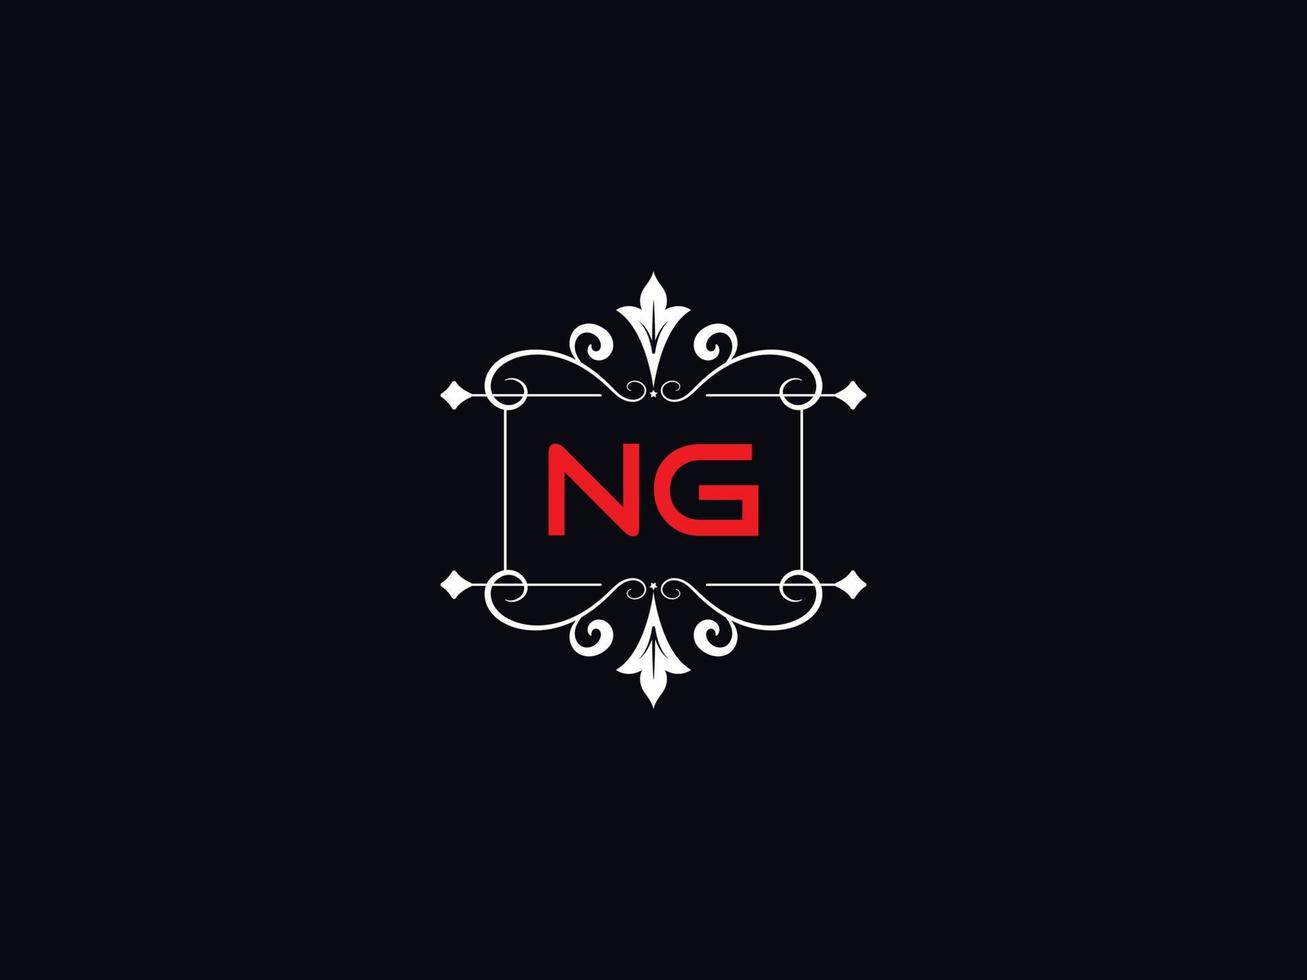 Minimalist Ng Logo Image, Creative Ng Luxury Letter Logo Vector